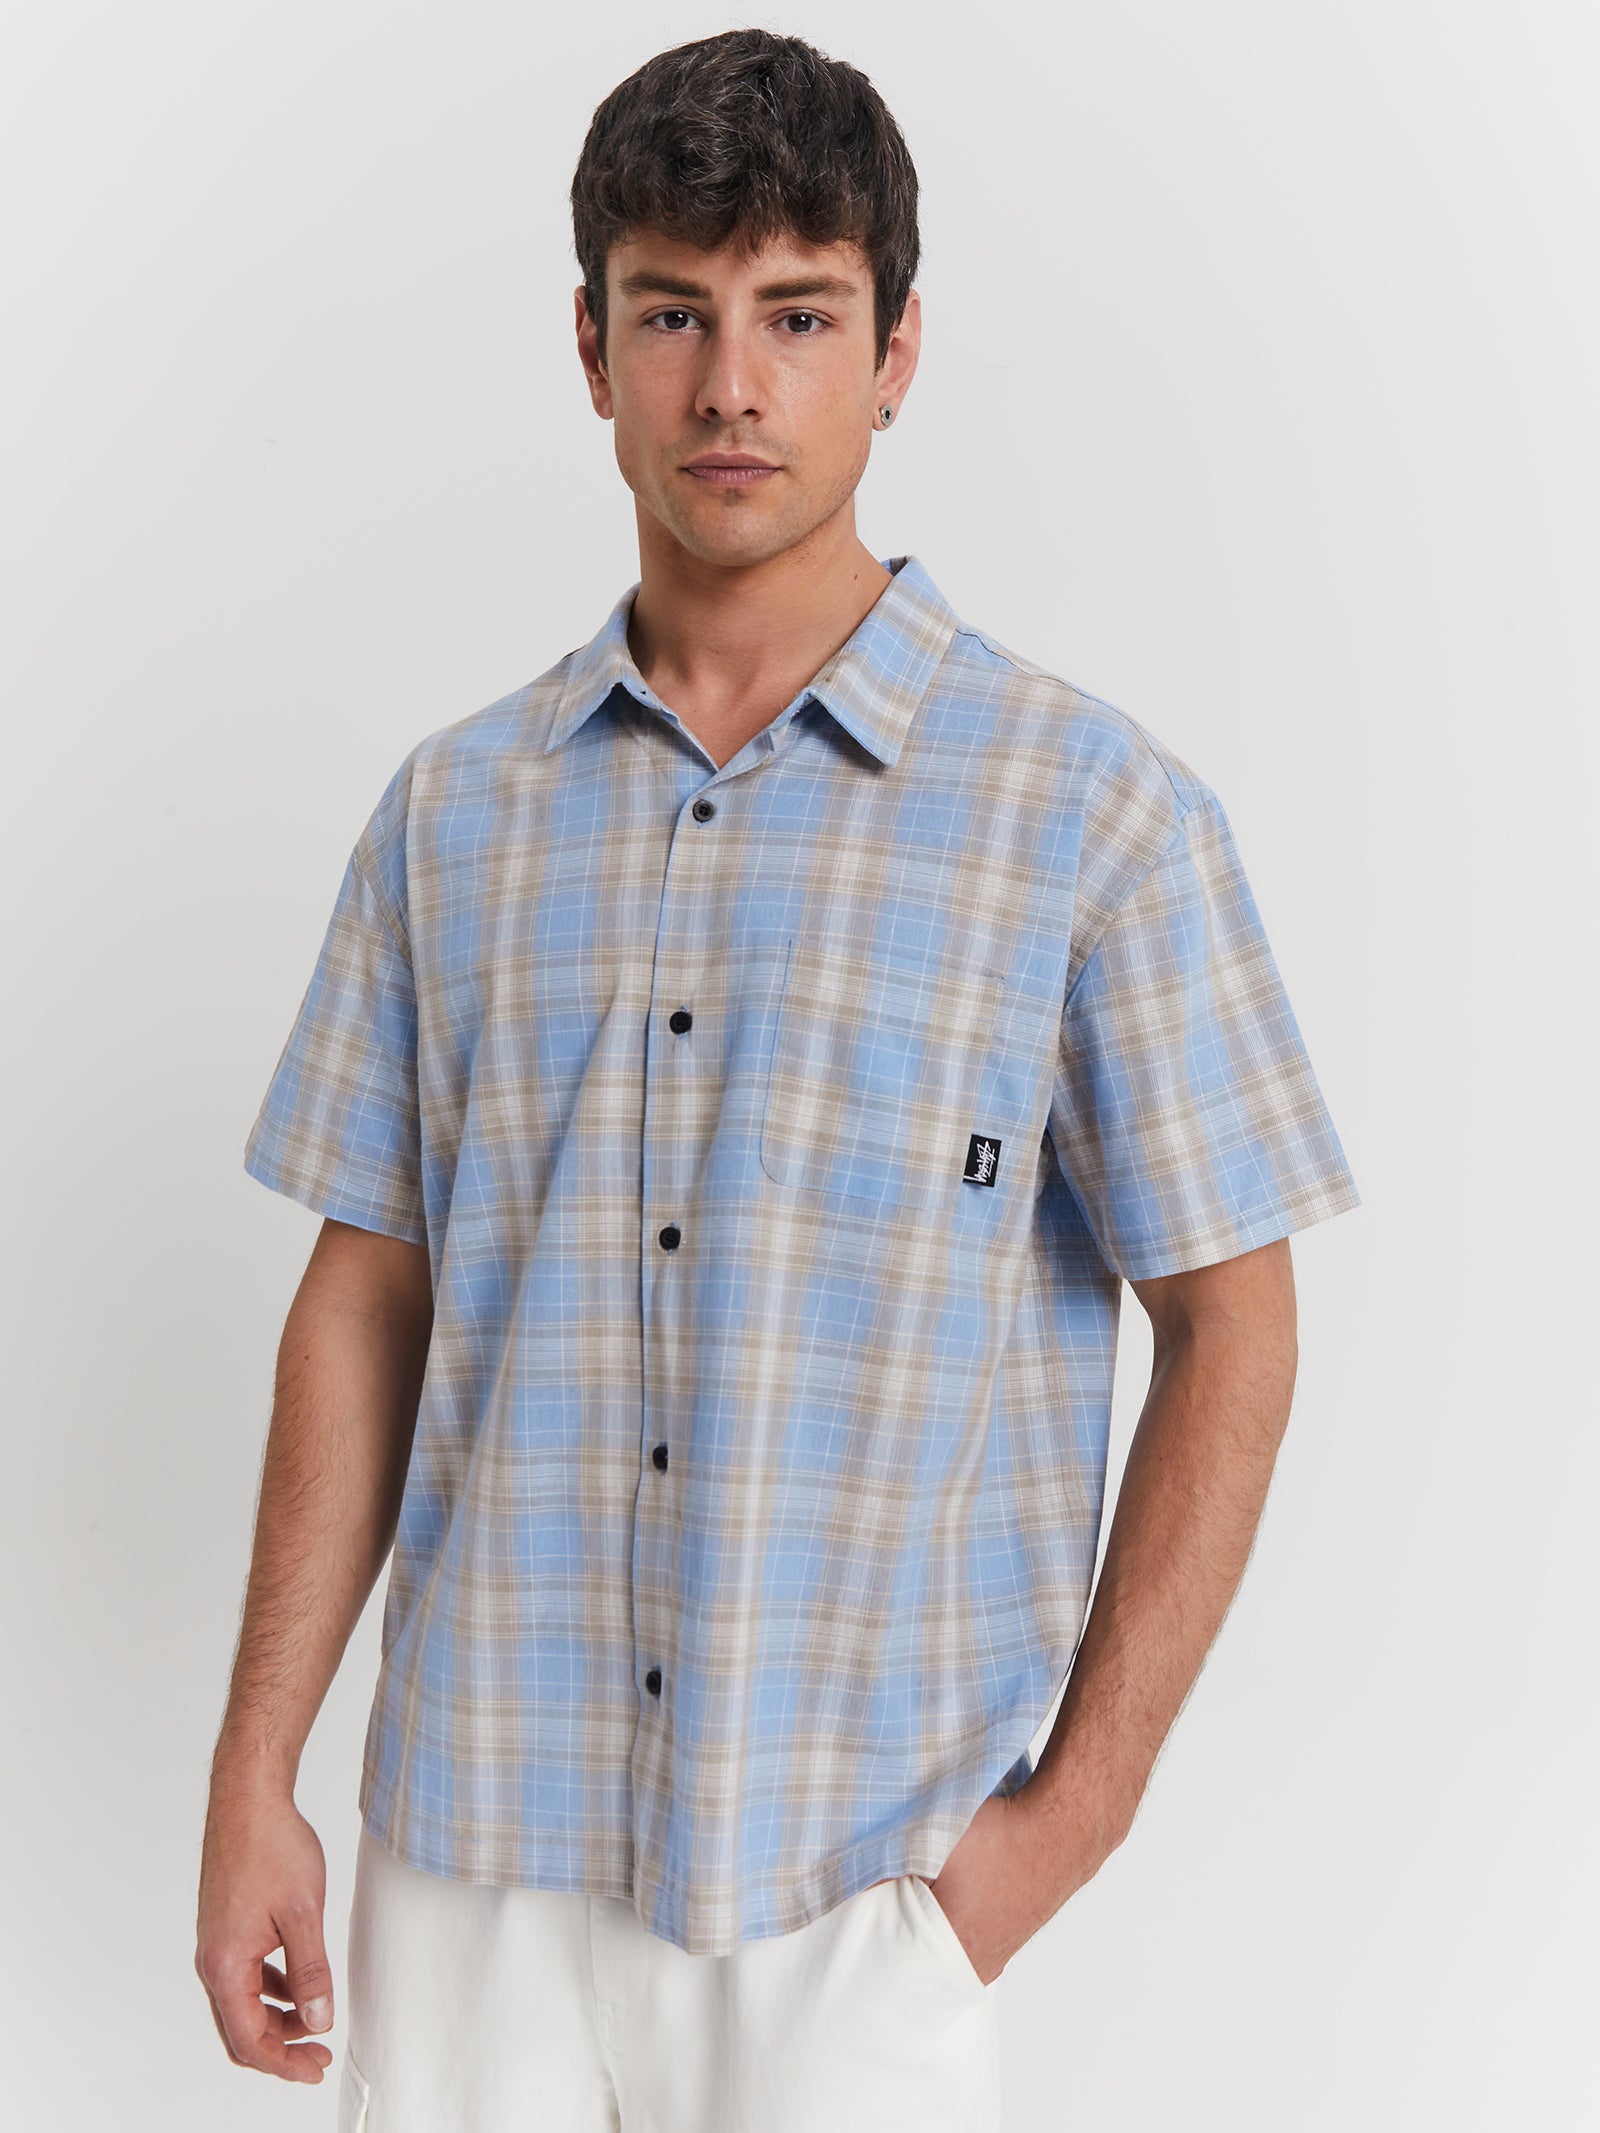 Ornata Pocket Short Sleeve Shirt in Blue Check - Glue Store